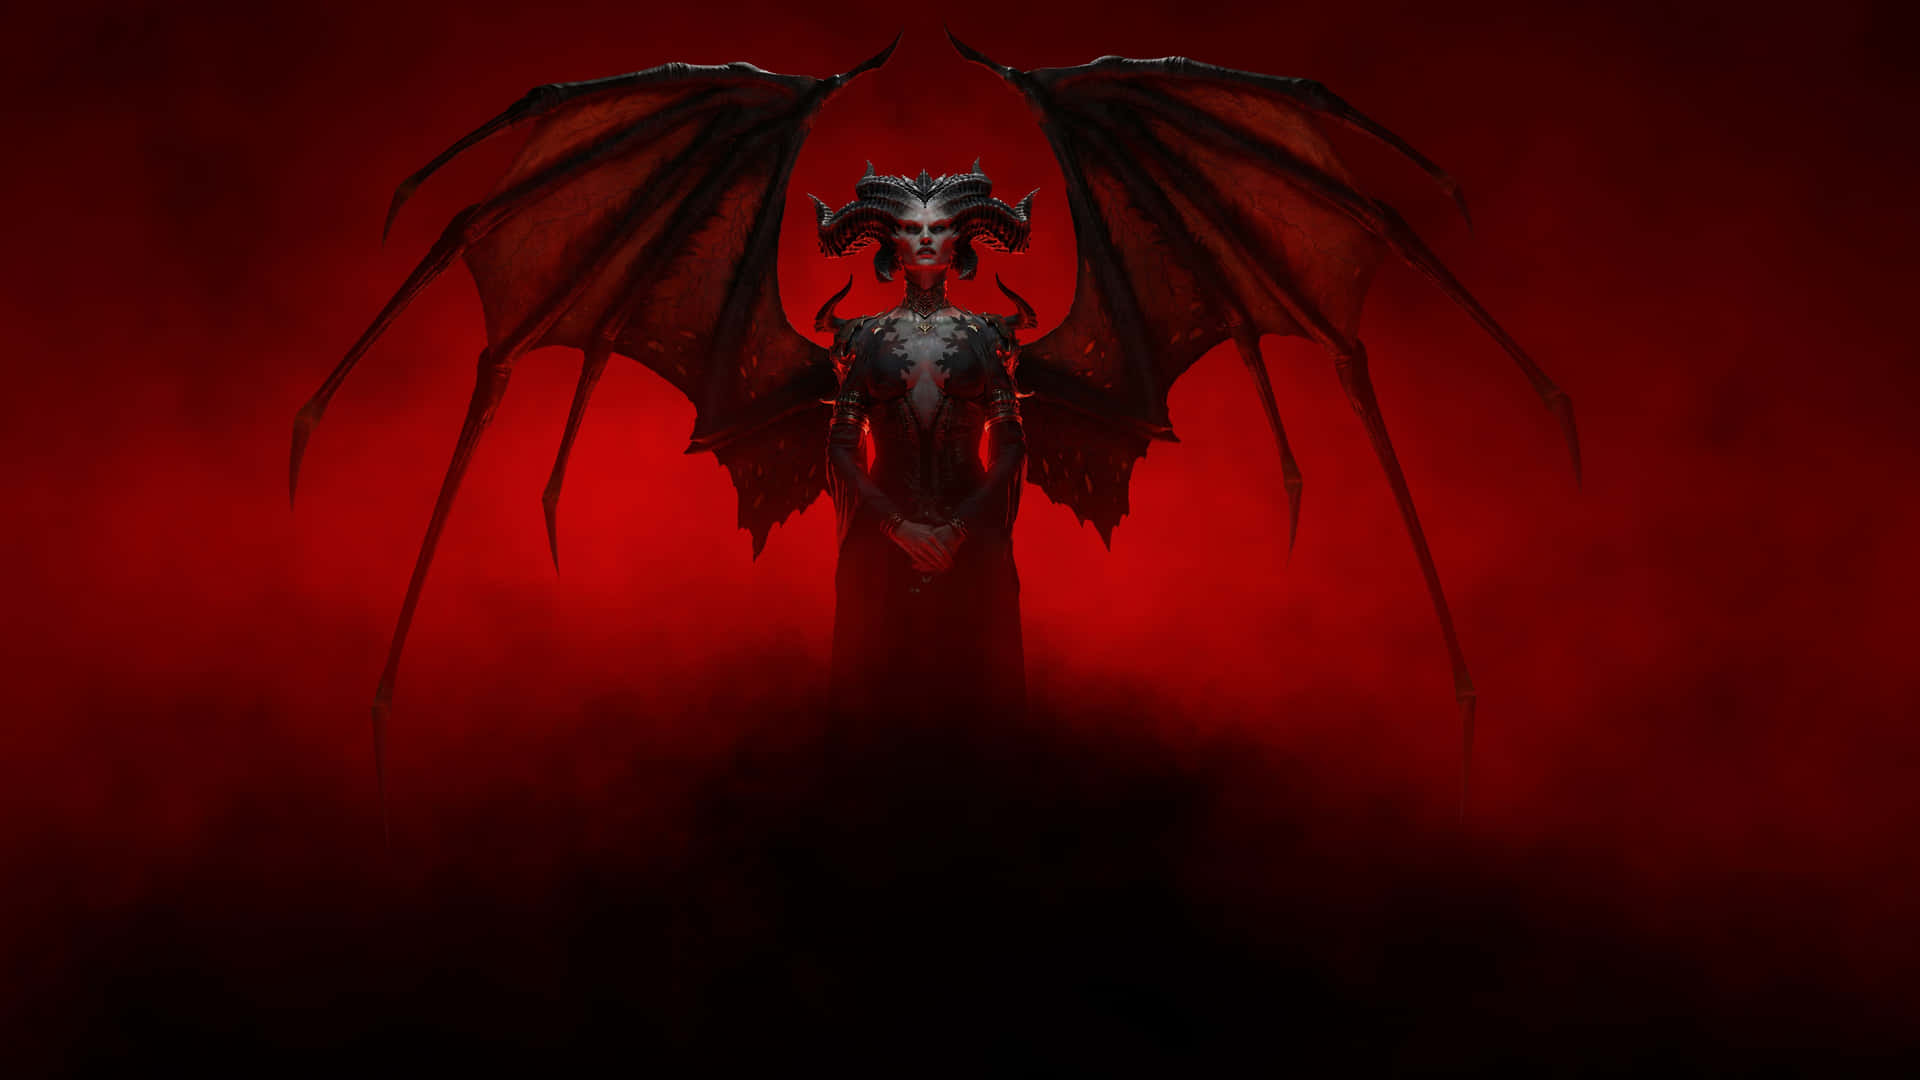 Lilith Demonic Figure Red Backdrop Wallpaper